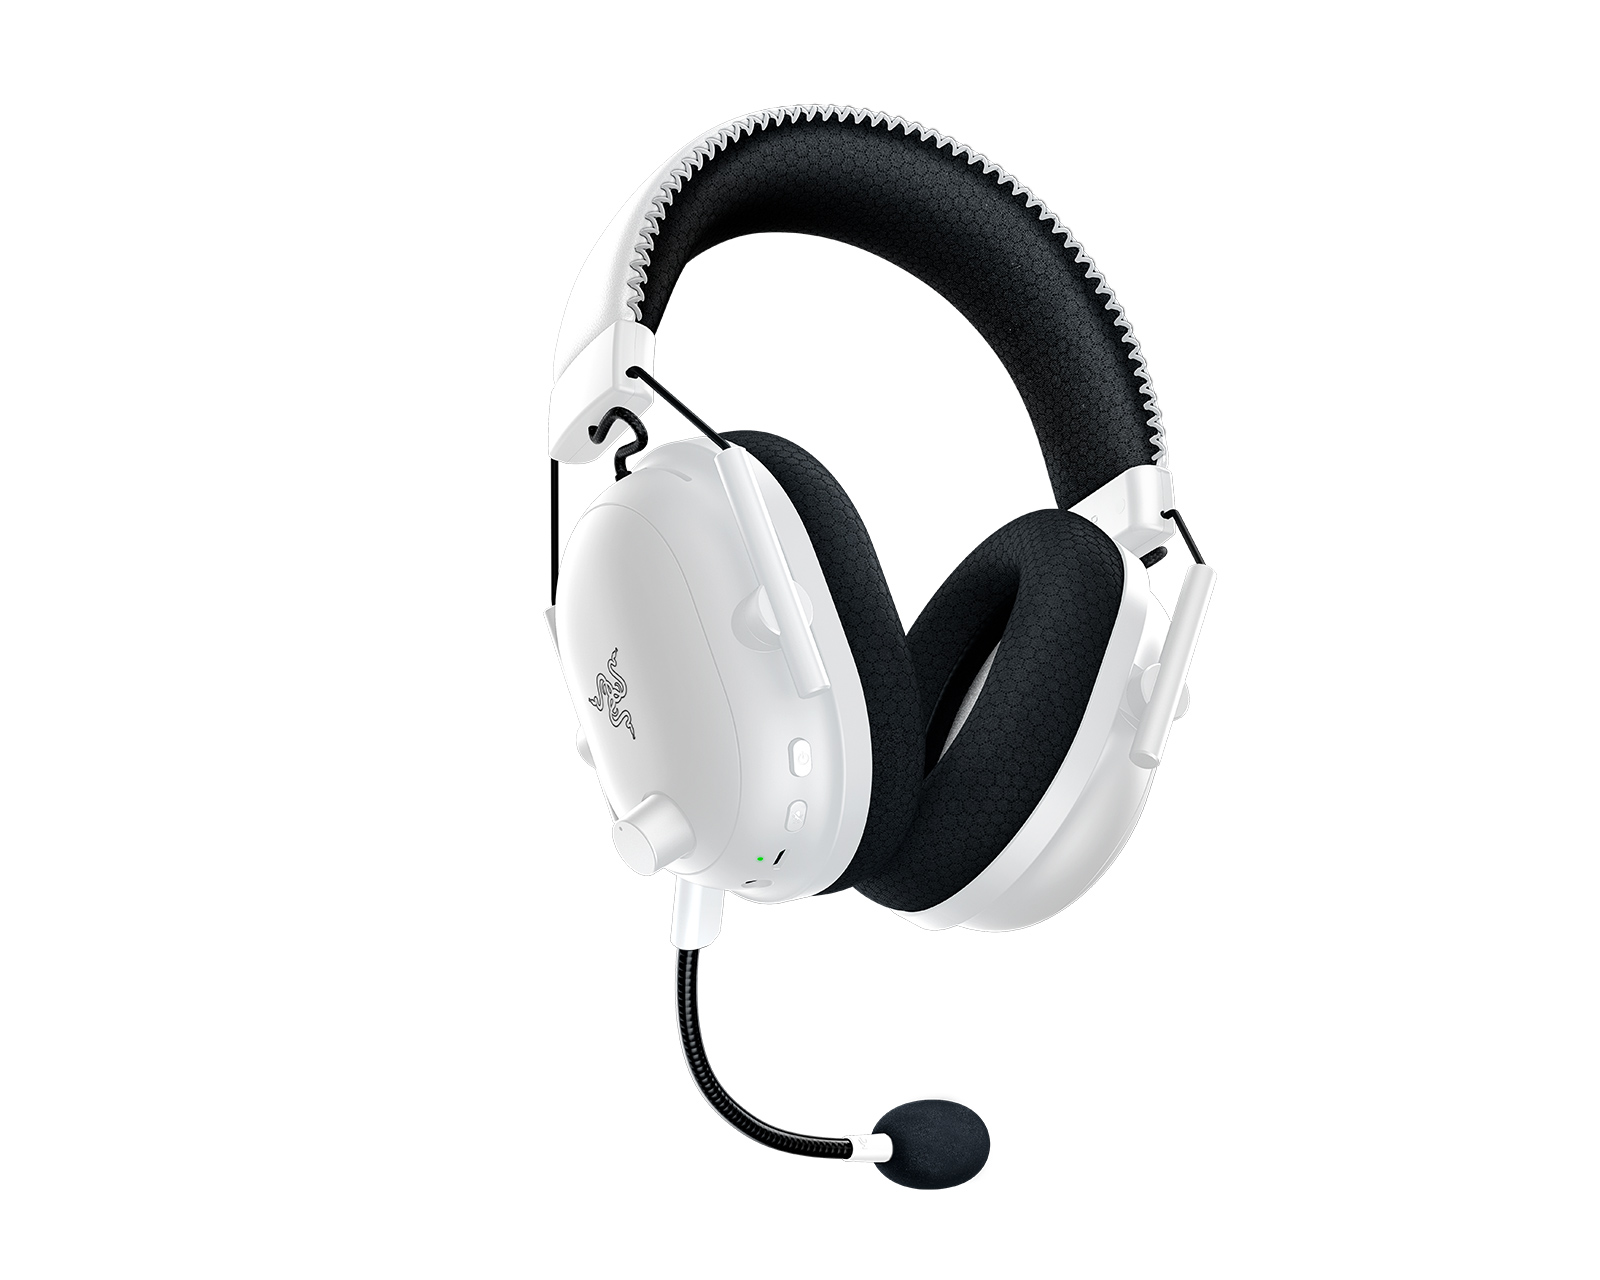 Razer BlackShark v2 Pro Wireless Gaming Headset - White